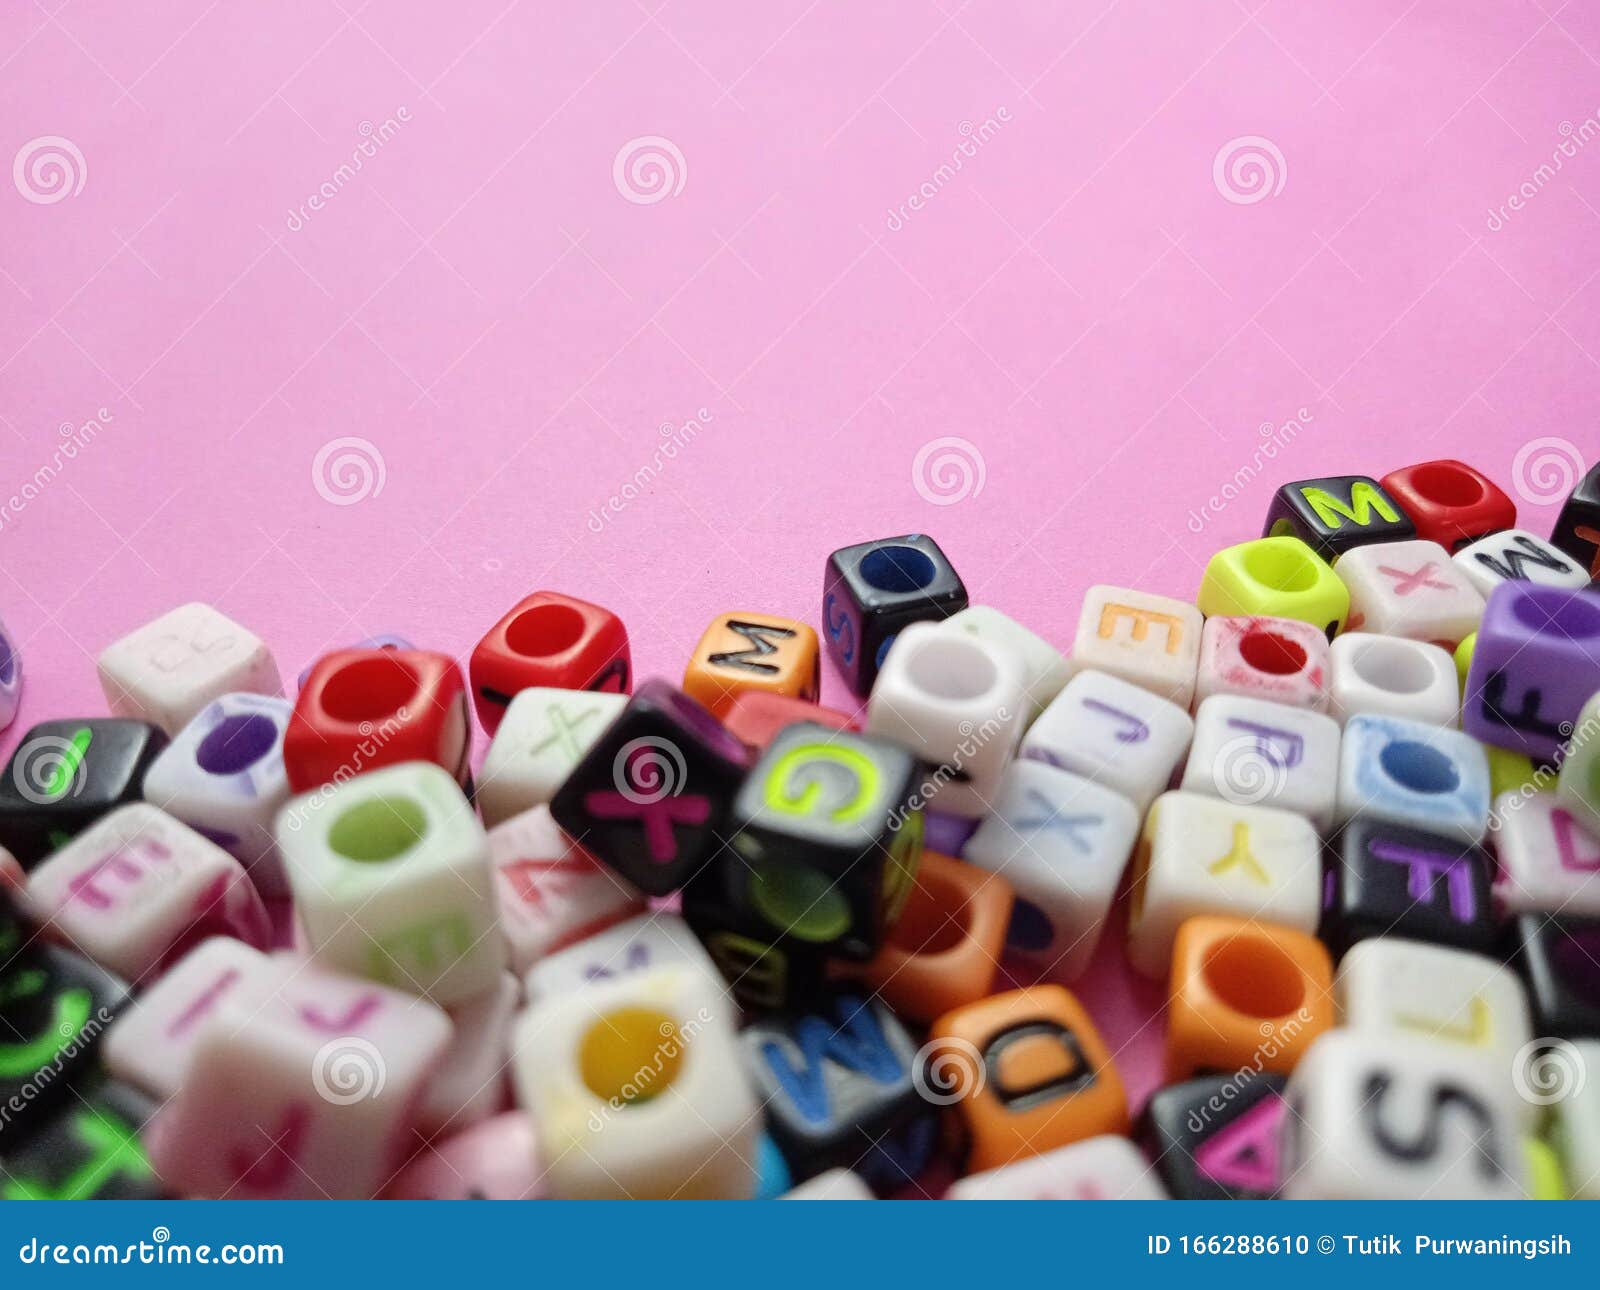 Photo Of Random Position Plastic Alphabet Cube Bead For ...